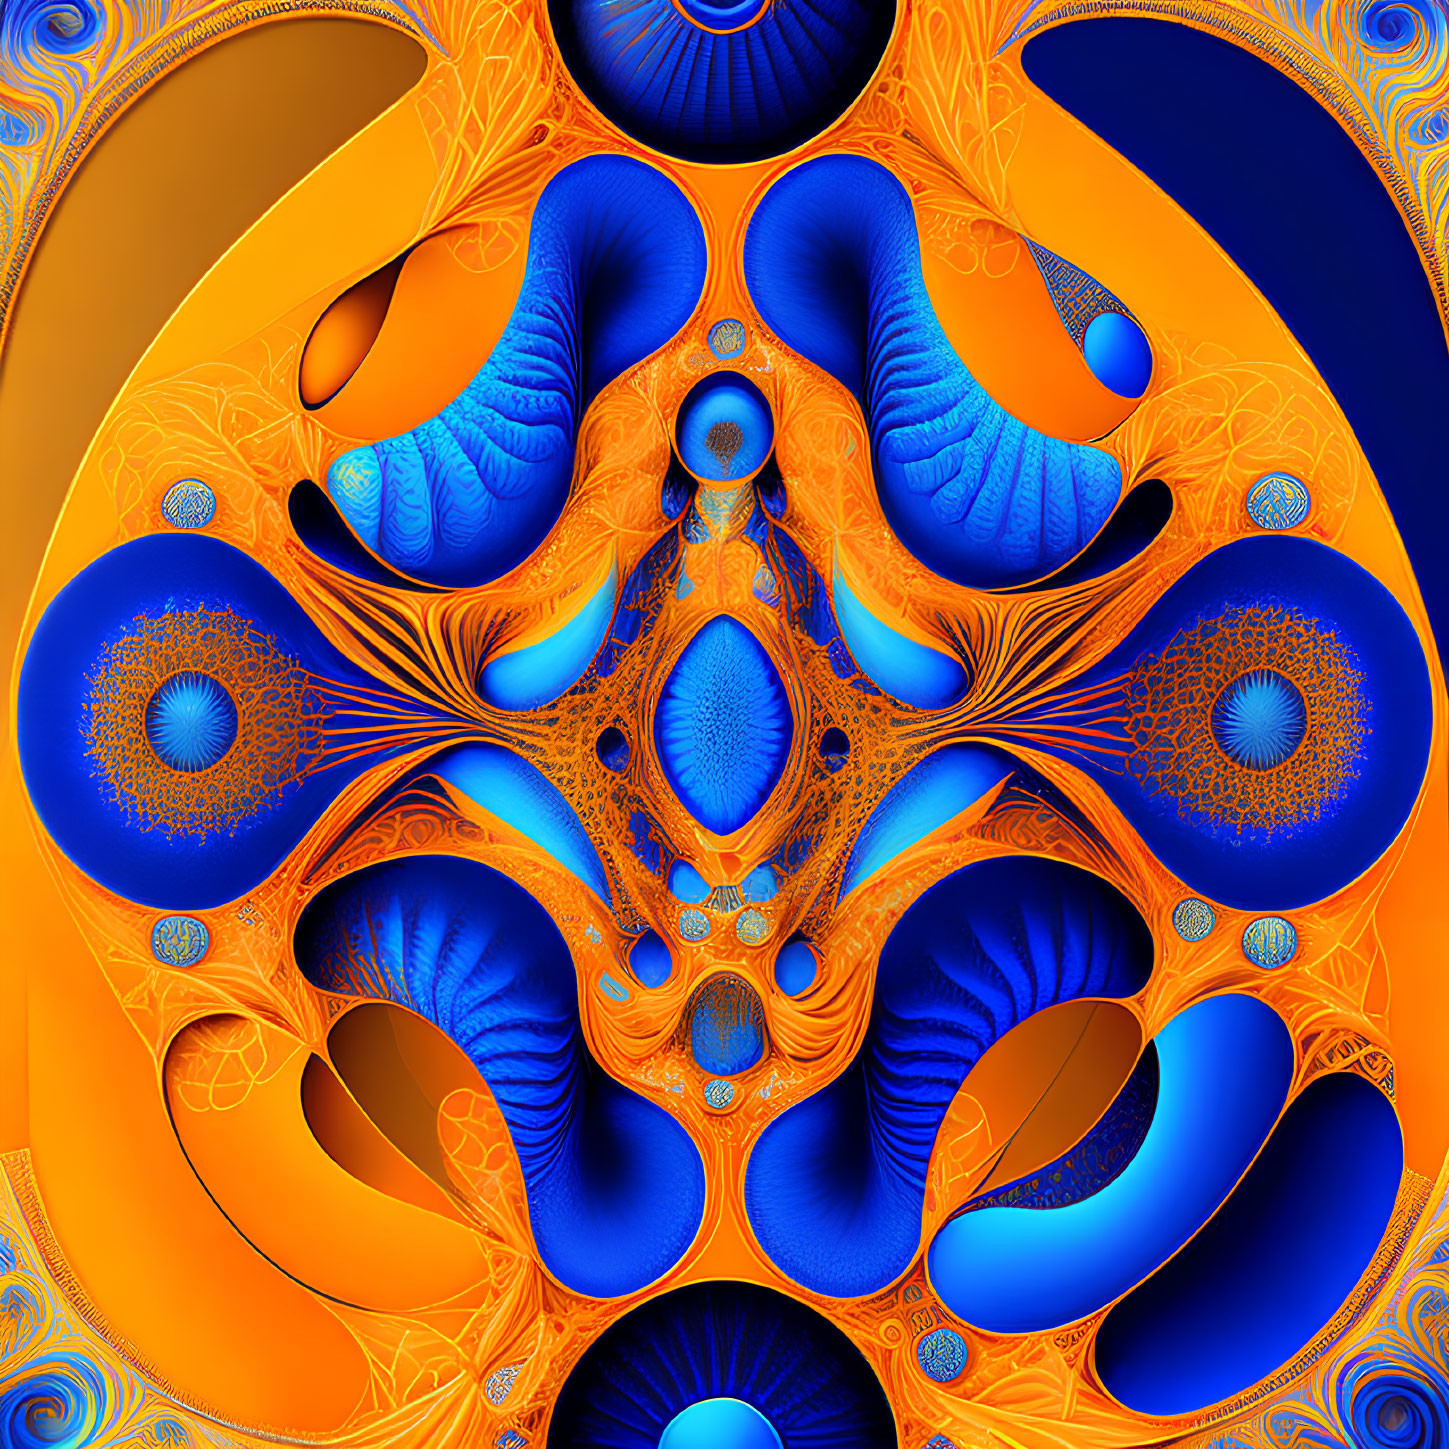 Symmetrical blue and orange fractal design with kaleidoscope pattern